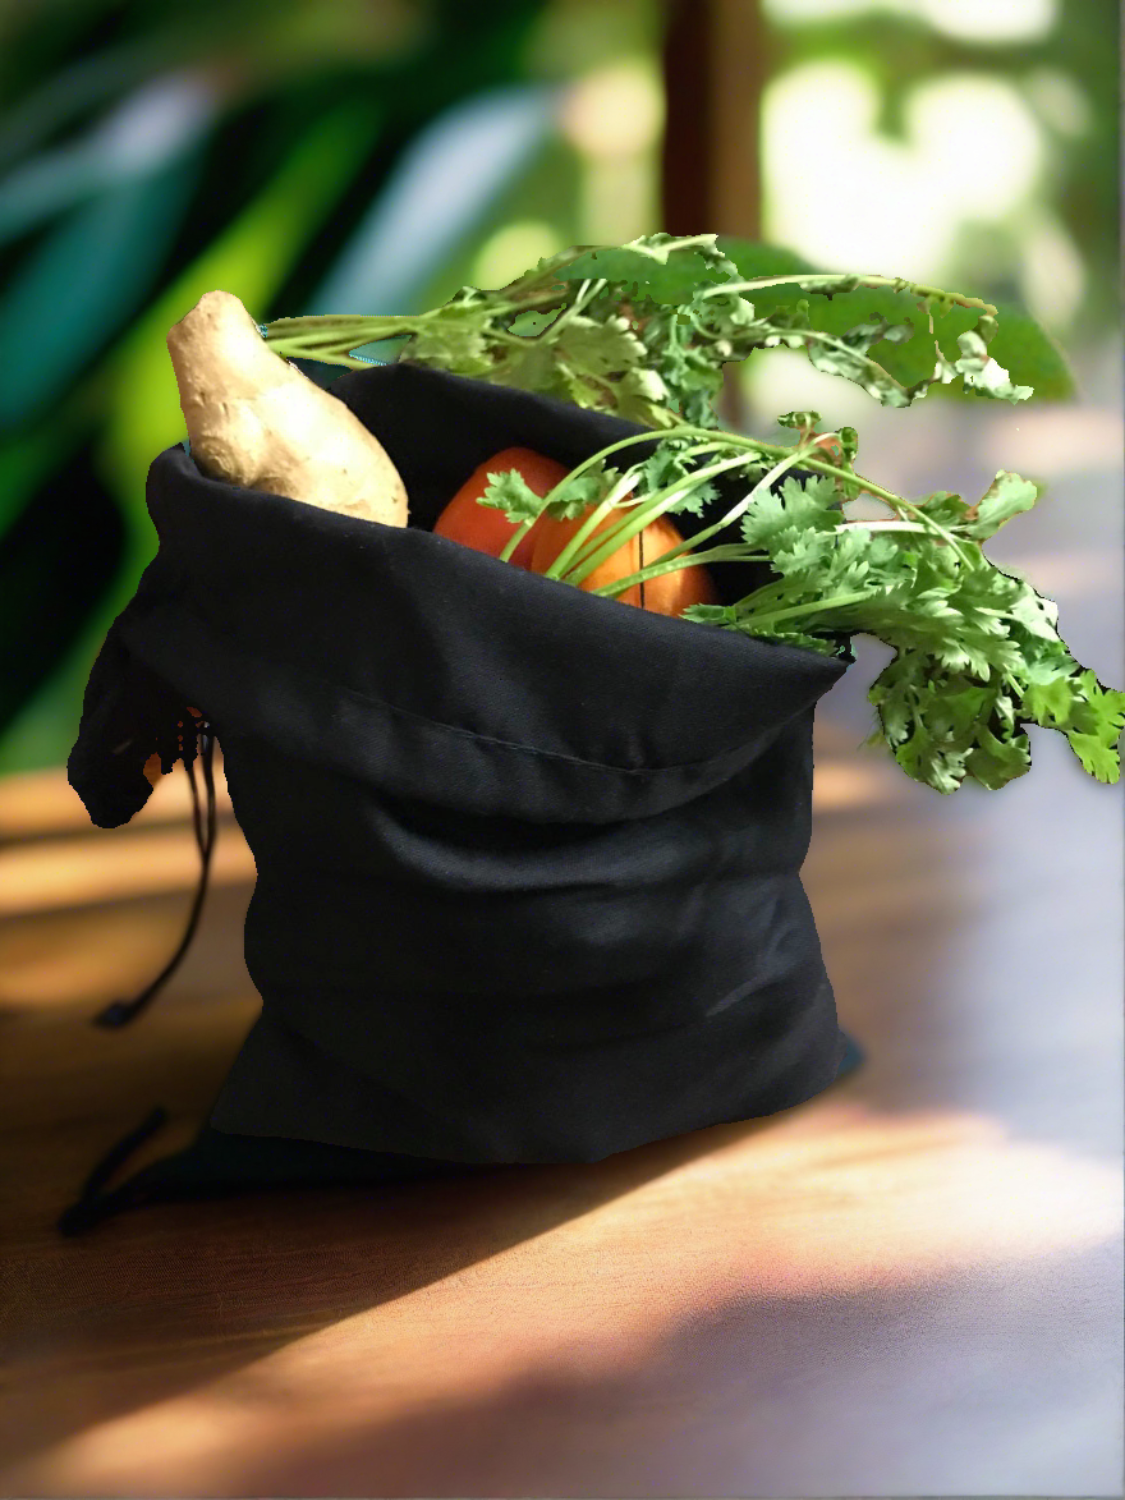 12x16 Inches Reusable Eco-Friendly Cotton Single Drawstring Bags Black Color